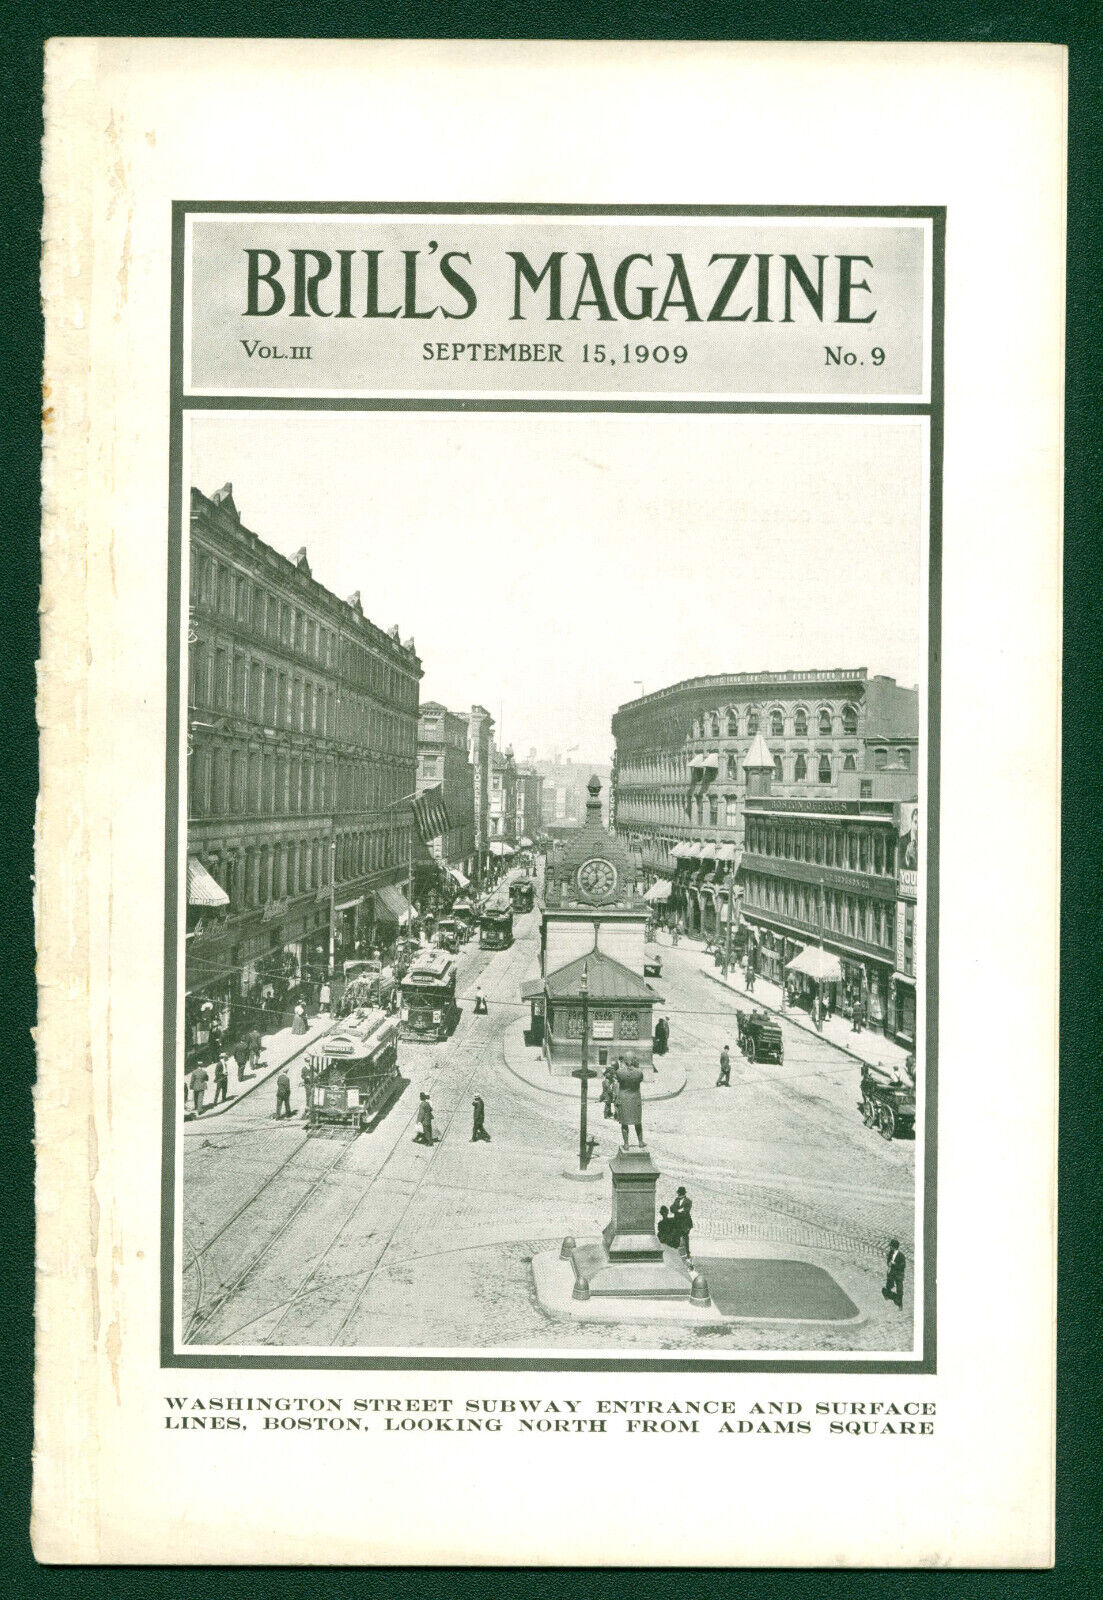 Brill\'s Magazine Sept. 15, 1909 Vol. 111, No. 9 - Original Issue NOT a Reprint